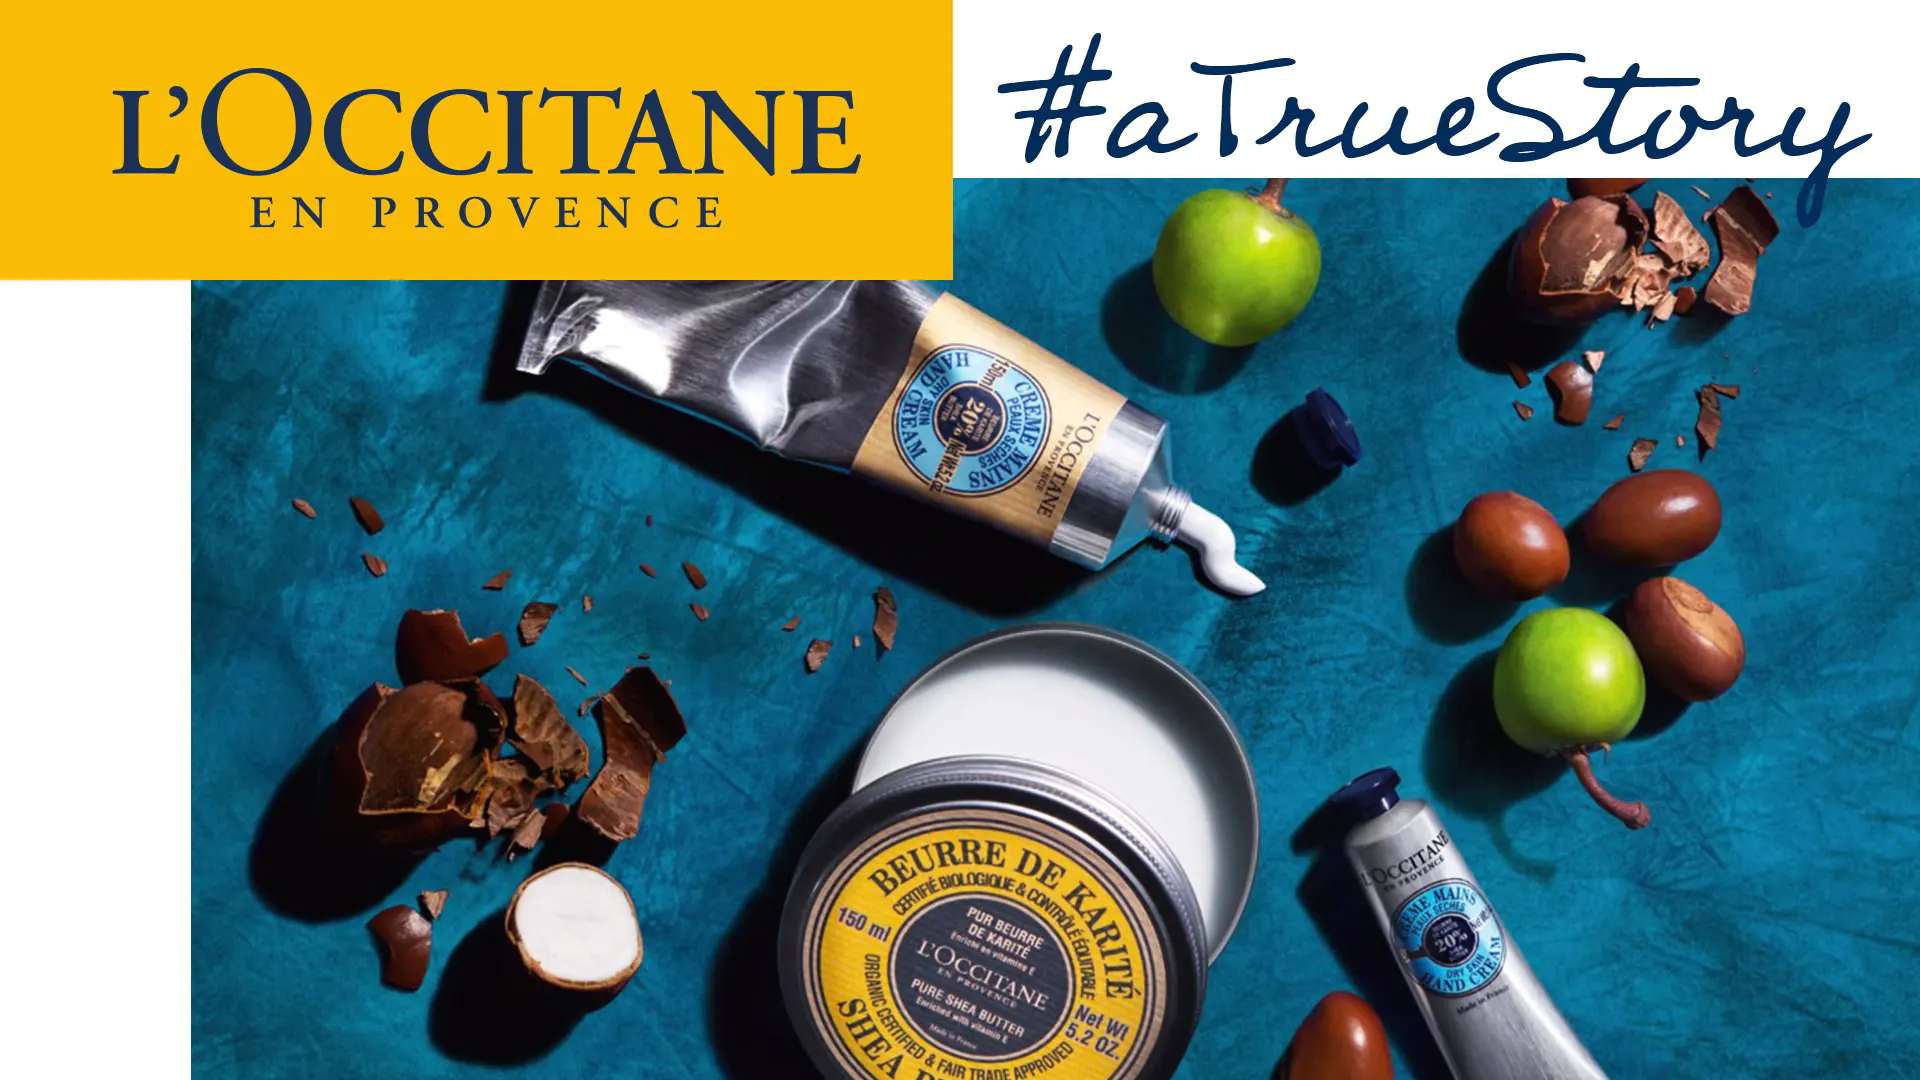 “The true story of L’OCCITANE” by L’OCCITANE en Provence